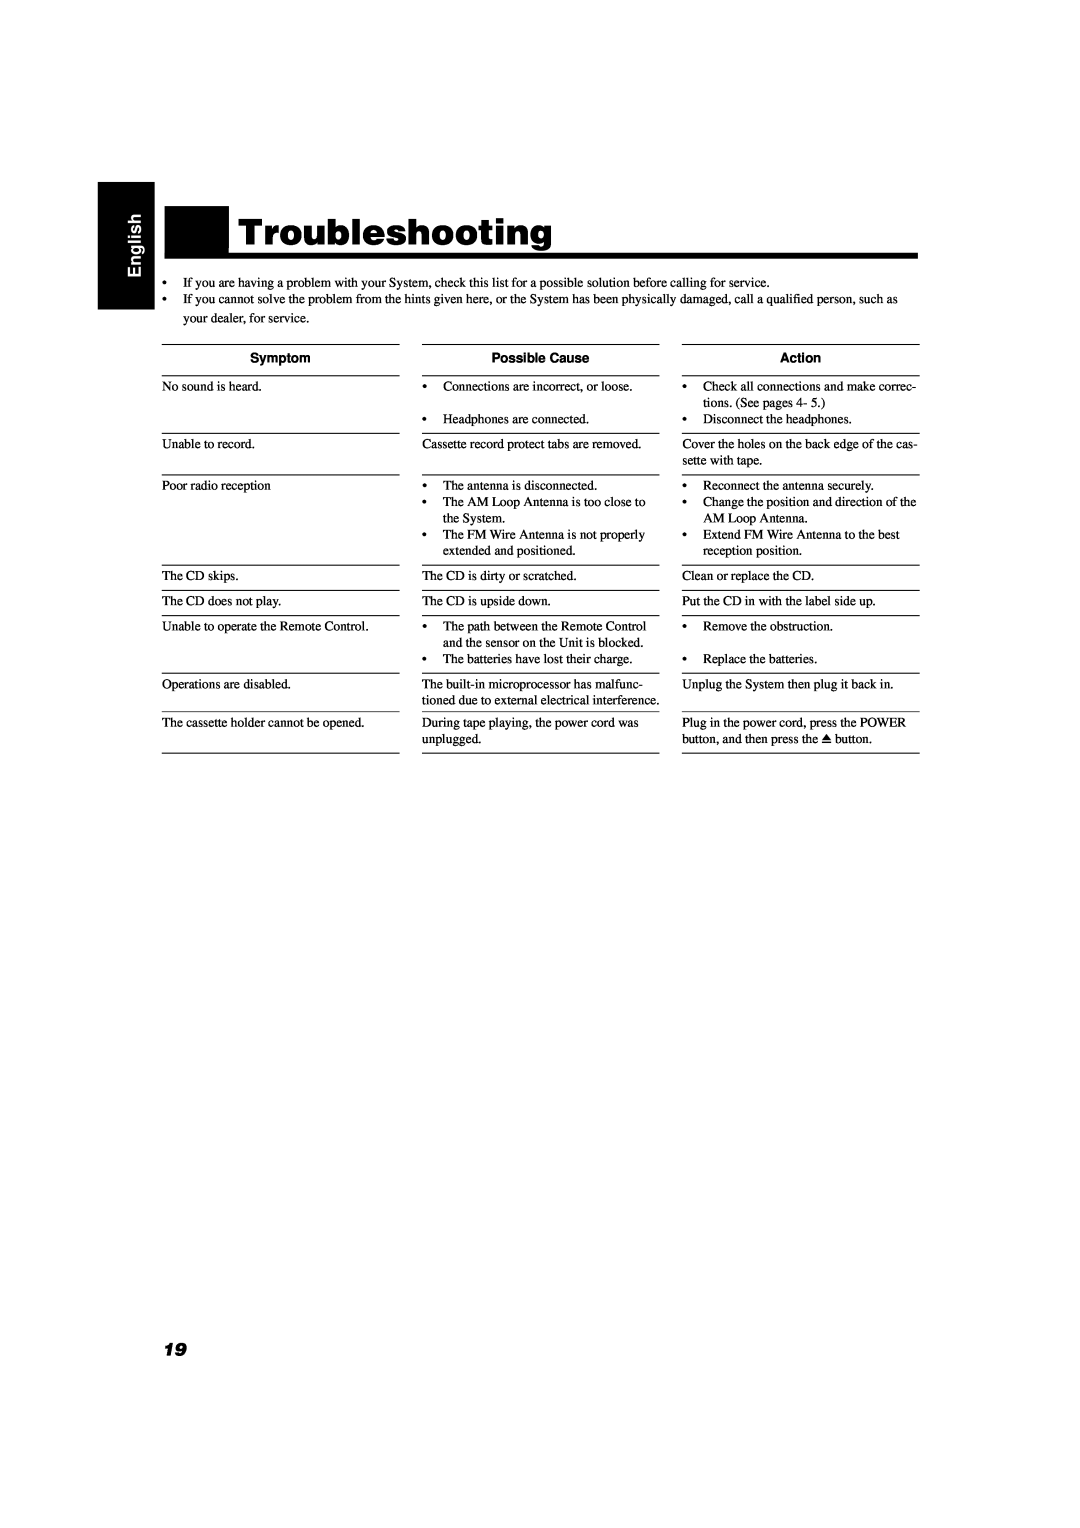 JVC FS-V5 manual Troubleshooting, English, Symptom, Possible Cause, Action 